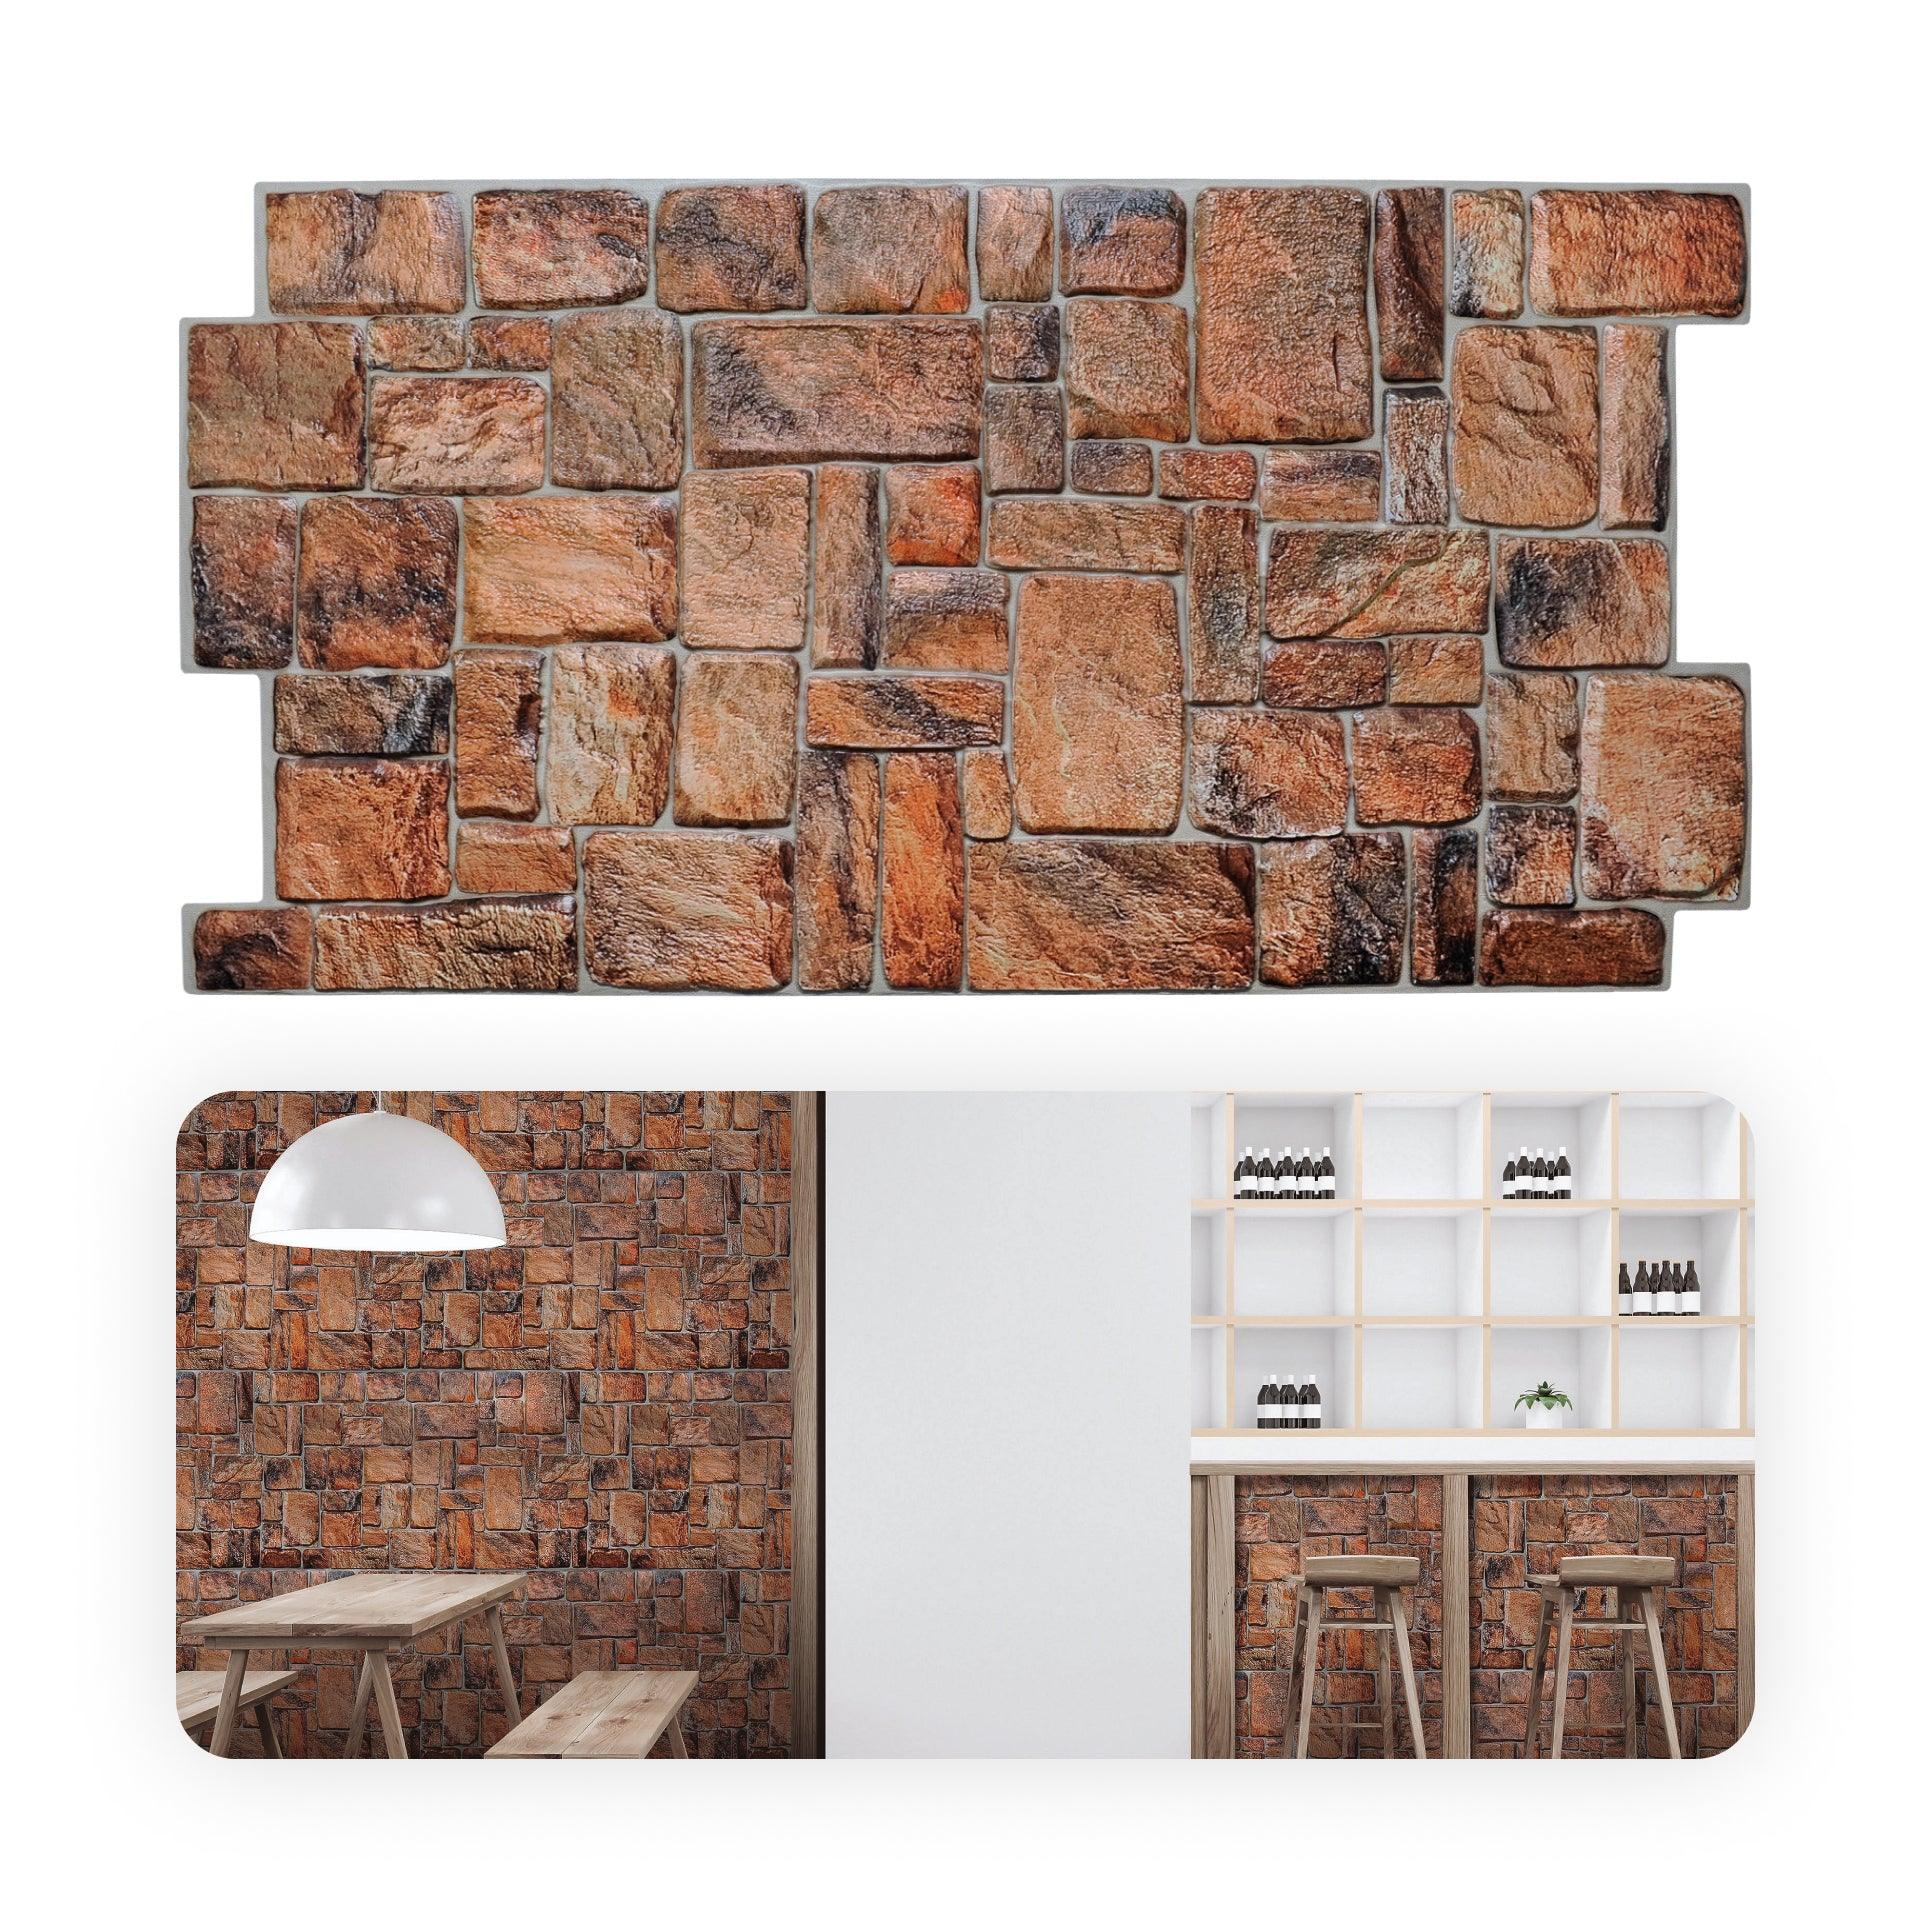 Natural Stone Panels - Smart Profile